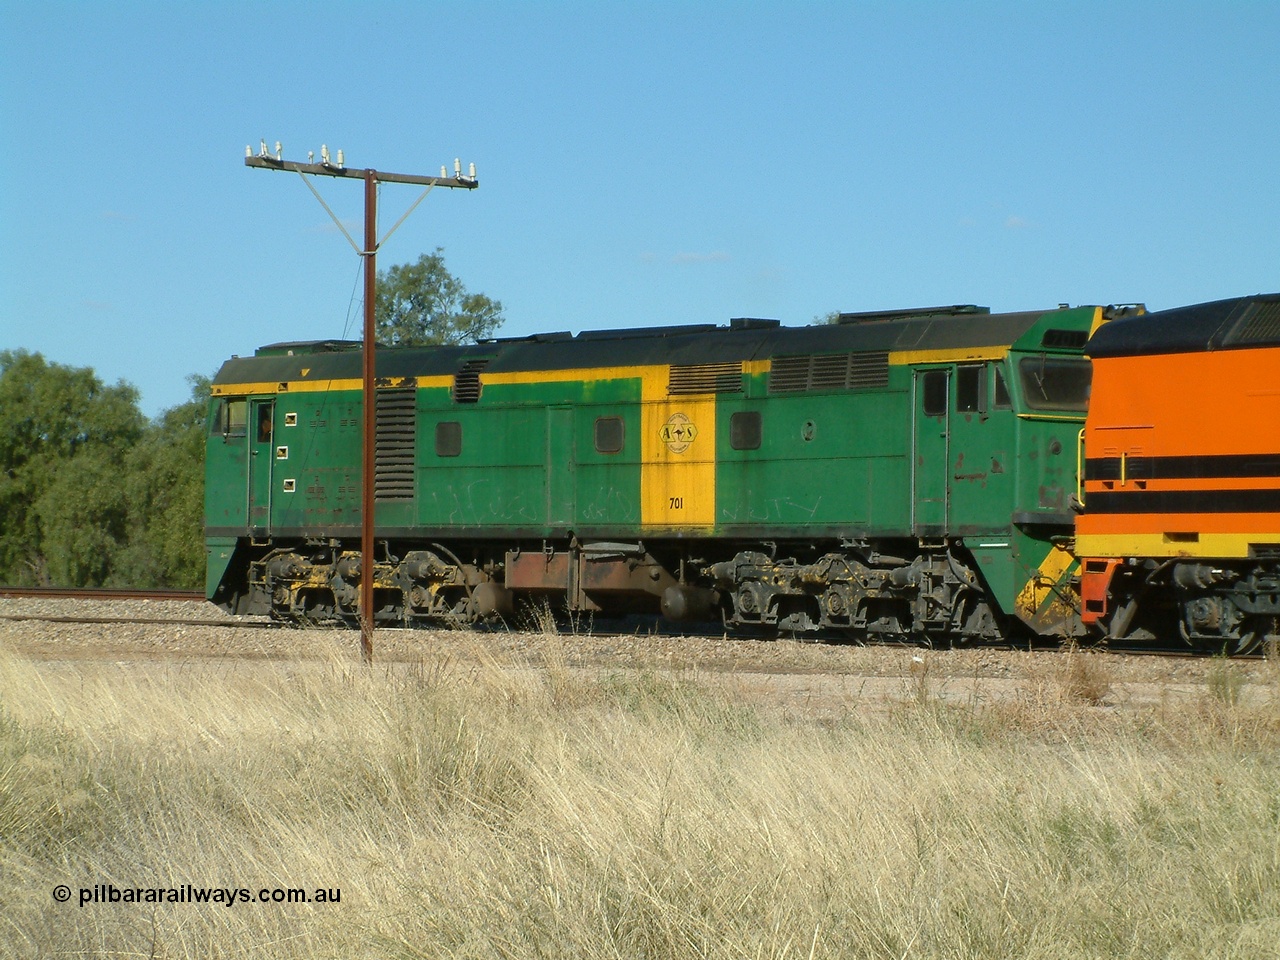 030403 153816
Gladstone, former South Australian Railways AE Goodwin built DL500G ALCo designated the 700 class, class leader 701 serial G6042-2 leads a grain train being loaded on the 3rd April 2003.
Keywords: 700-class;701;G6042-2;AE-Goodwin;ALCo;DL500G;